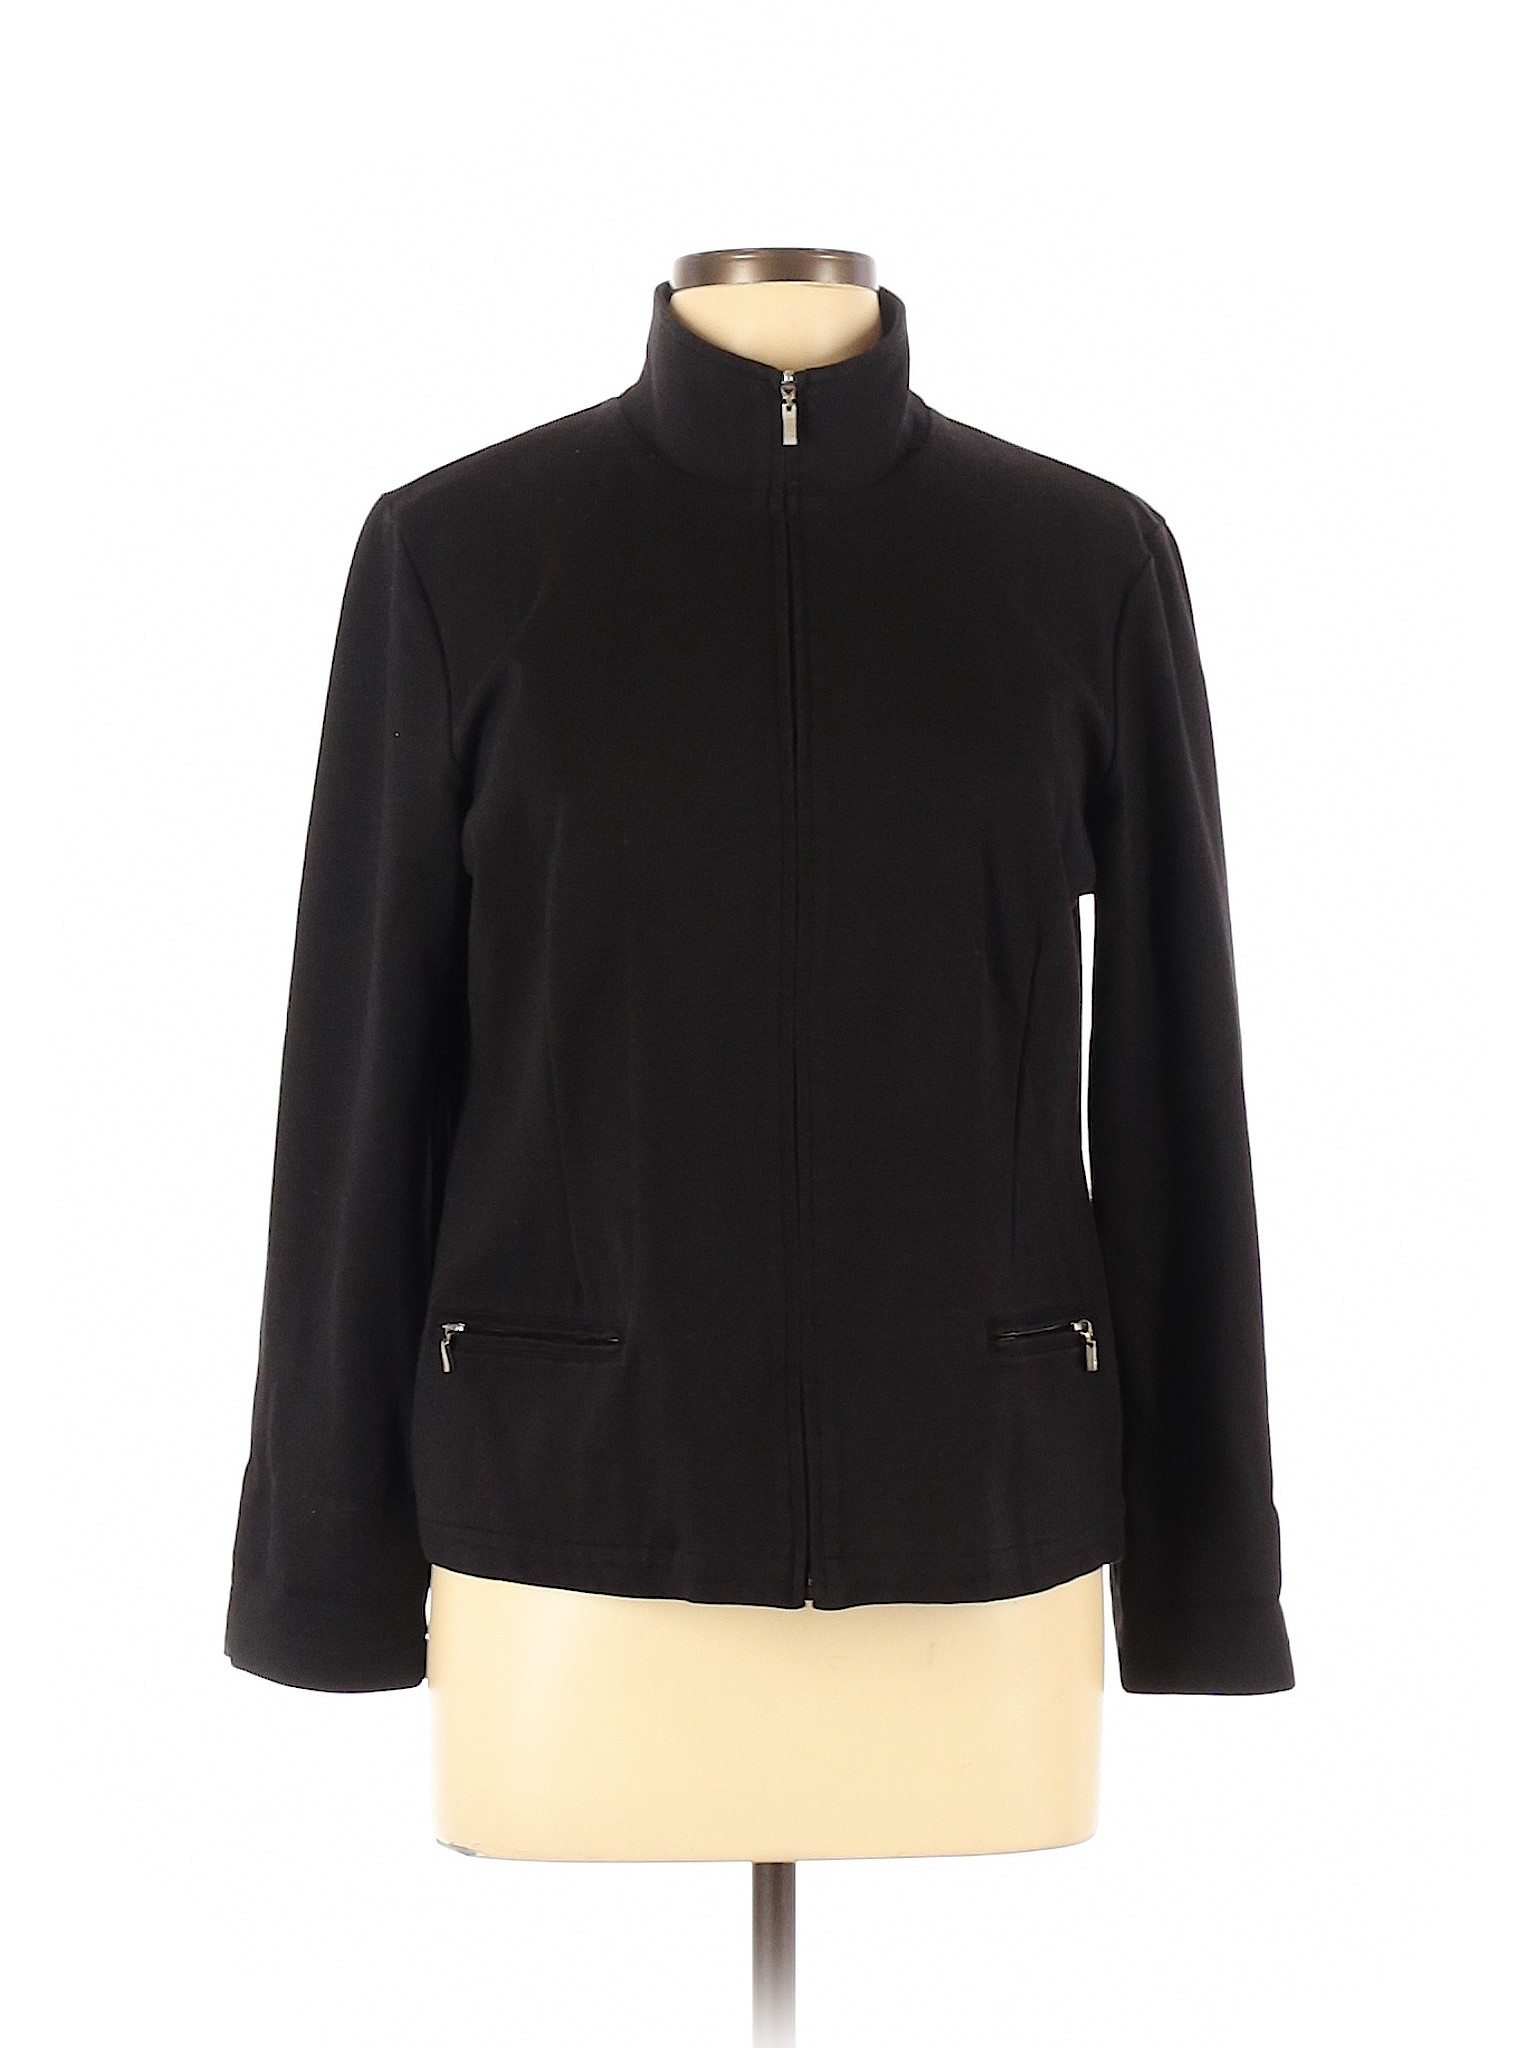 Talbots Women Black Jacket L | eBay